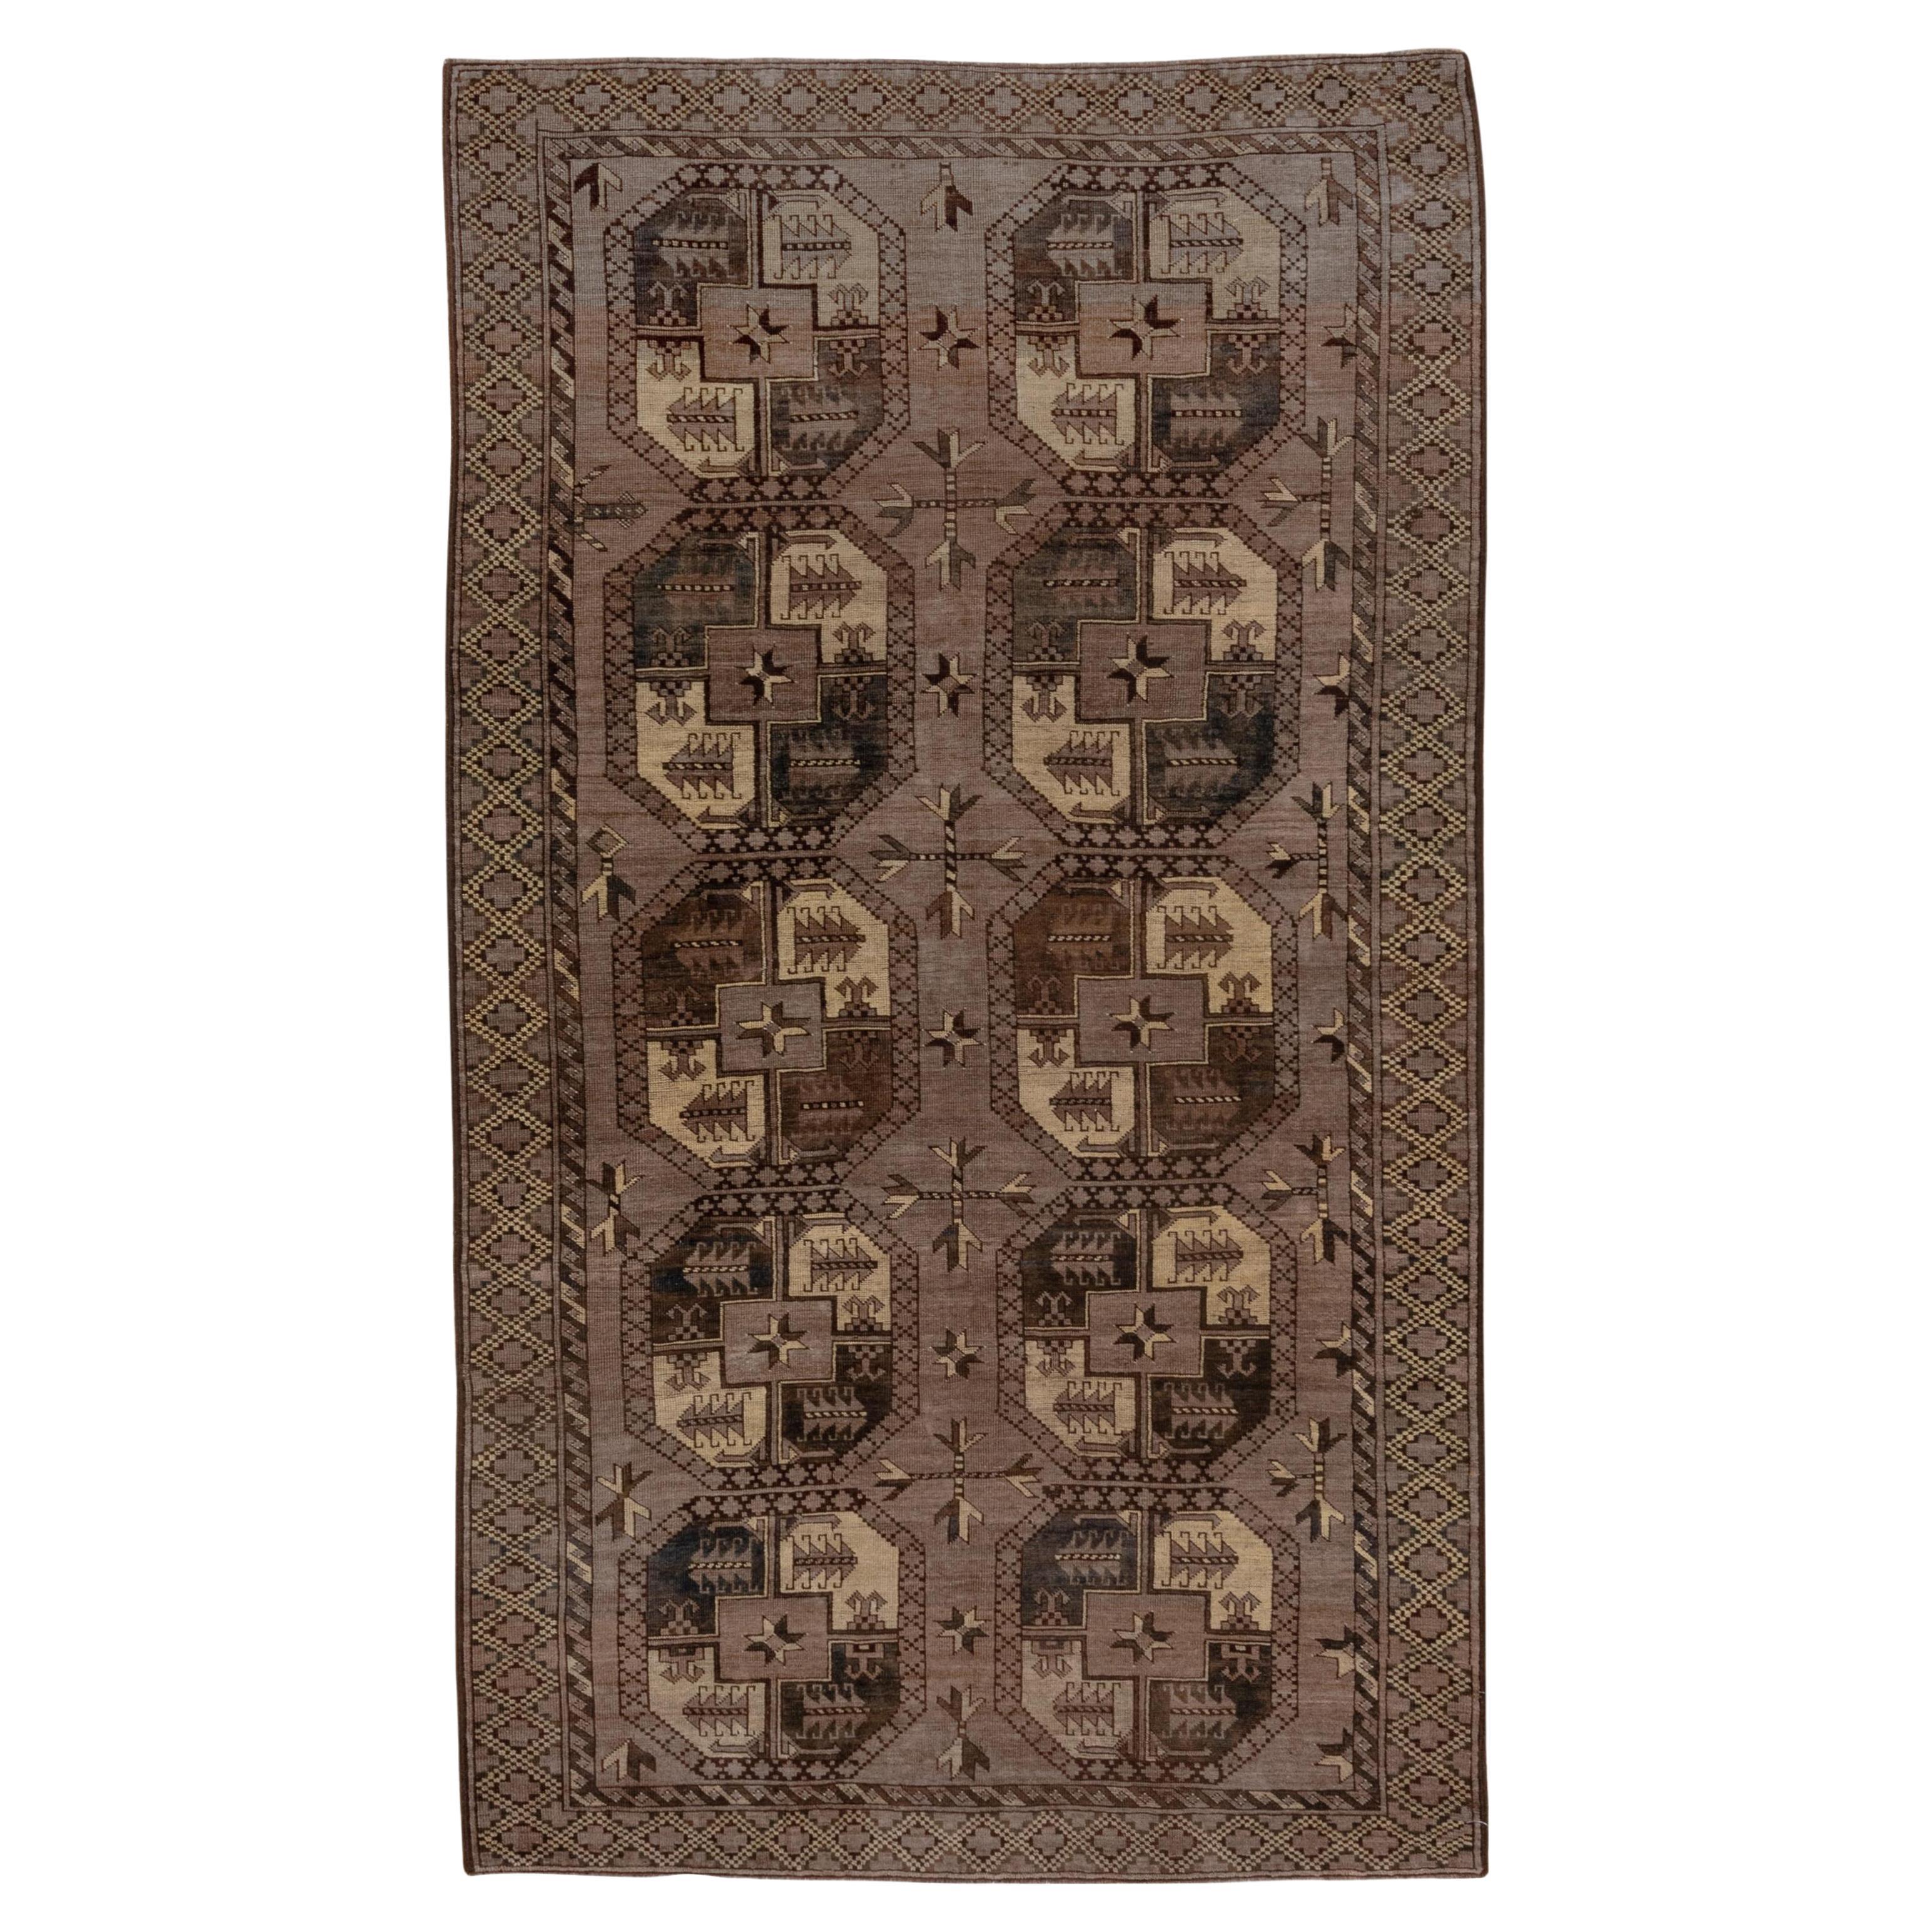 Antique Brown Afghan Ersari Carpet, Brown Tones, Allover Field, Gold Tones For Sale